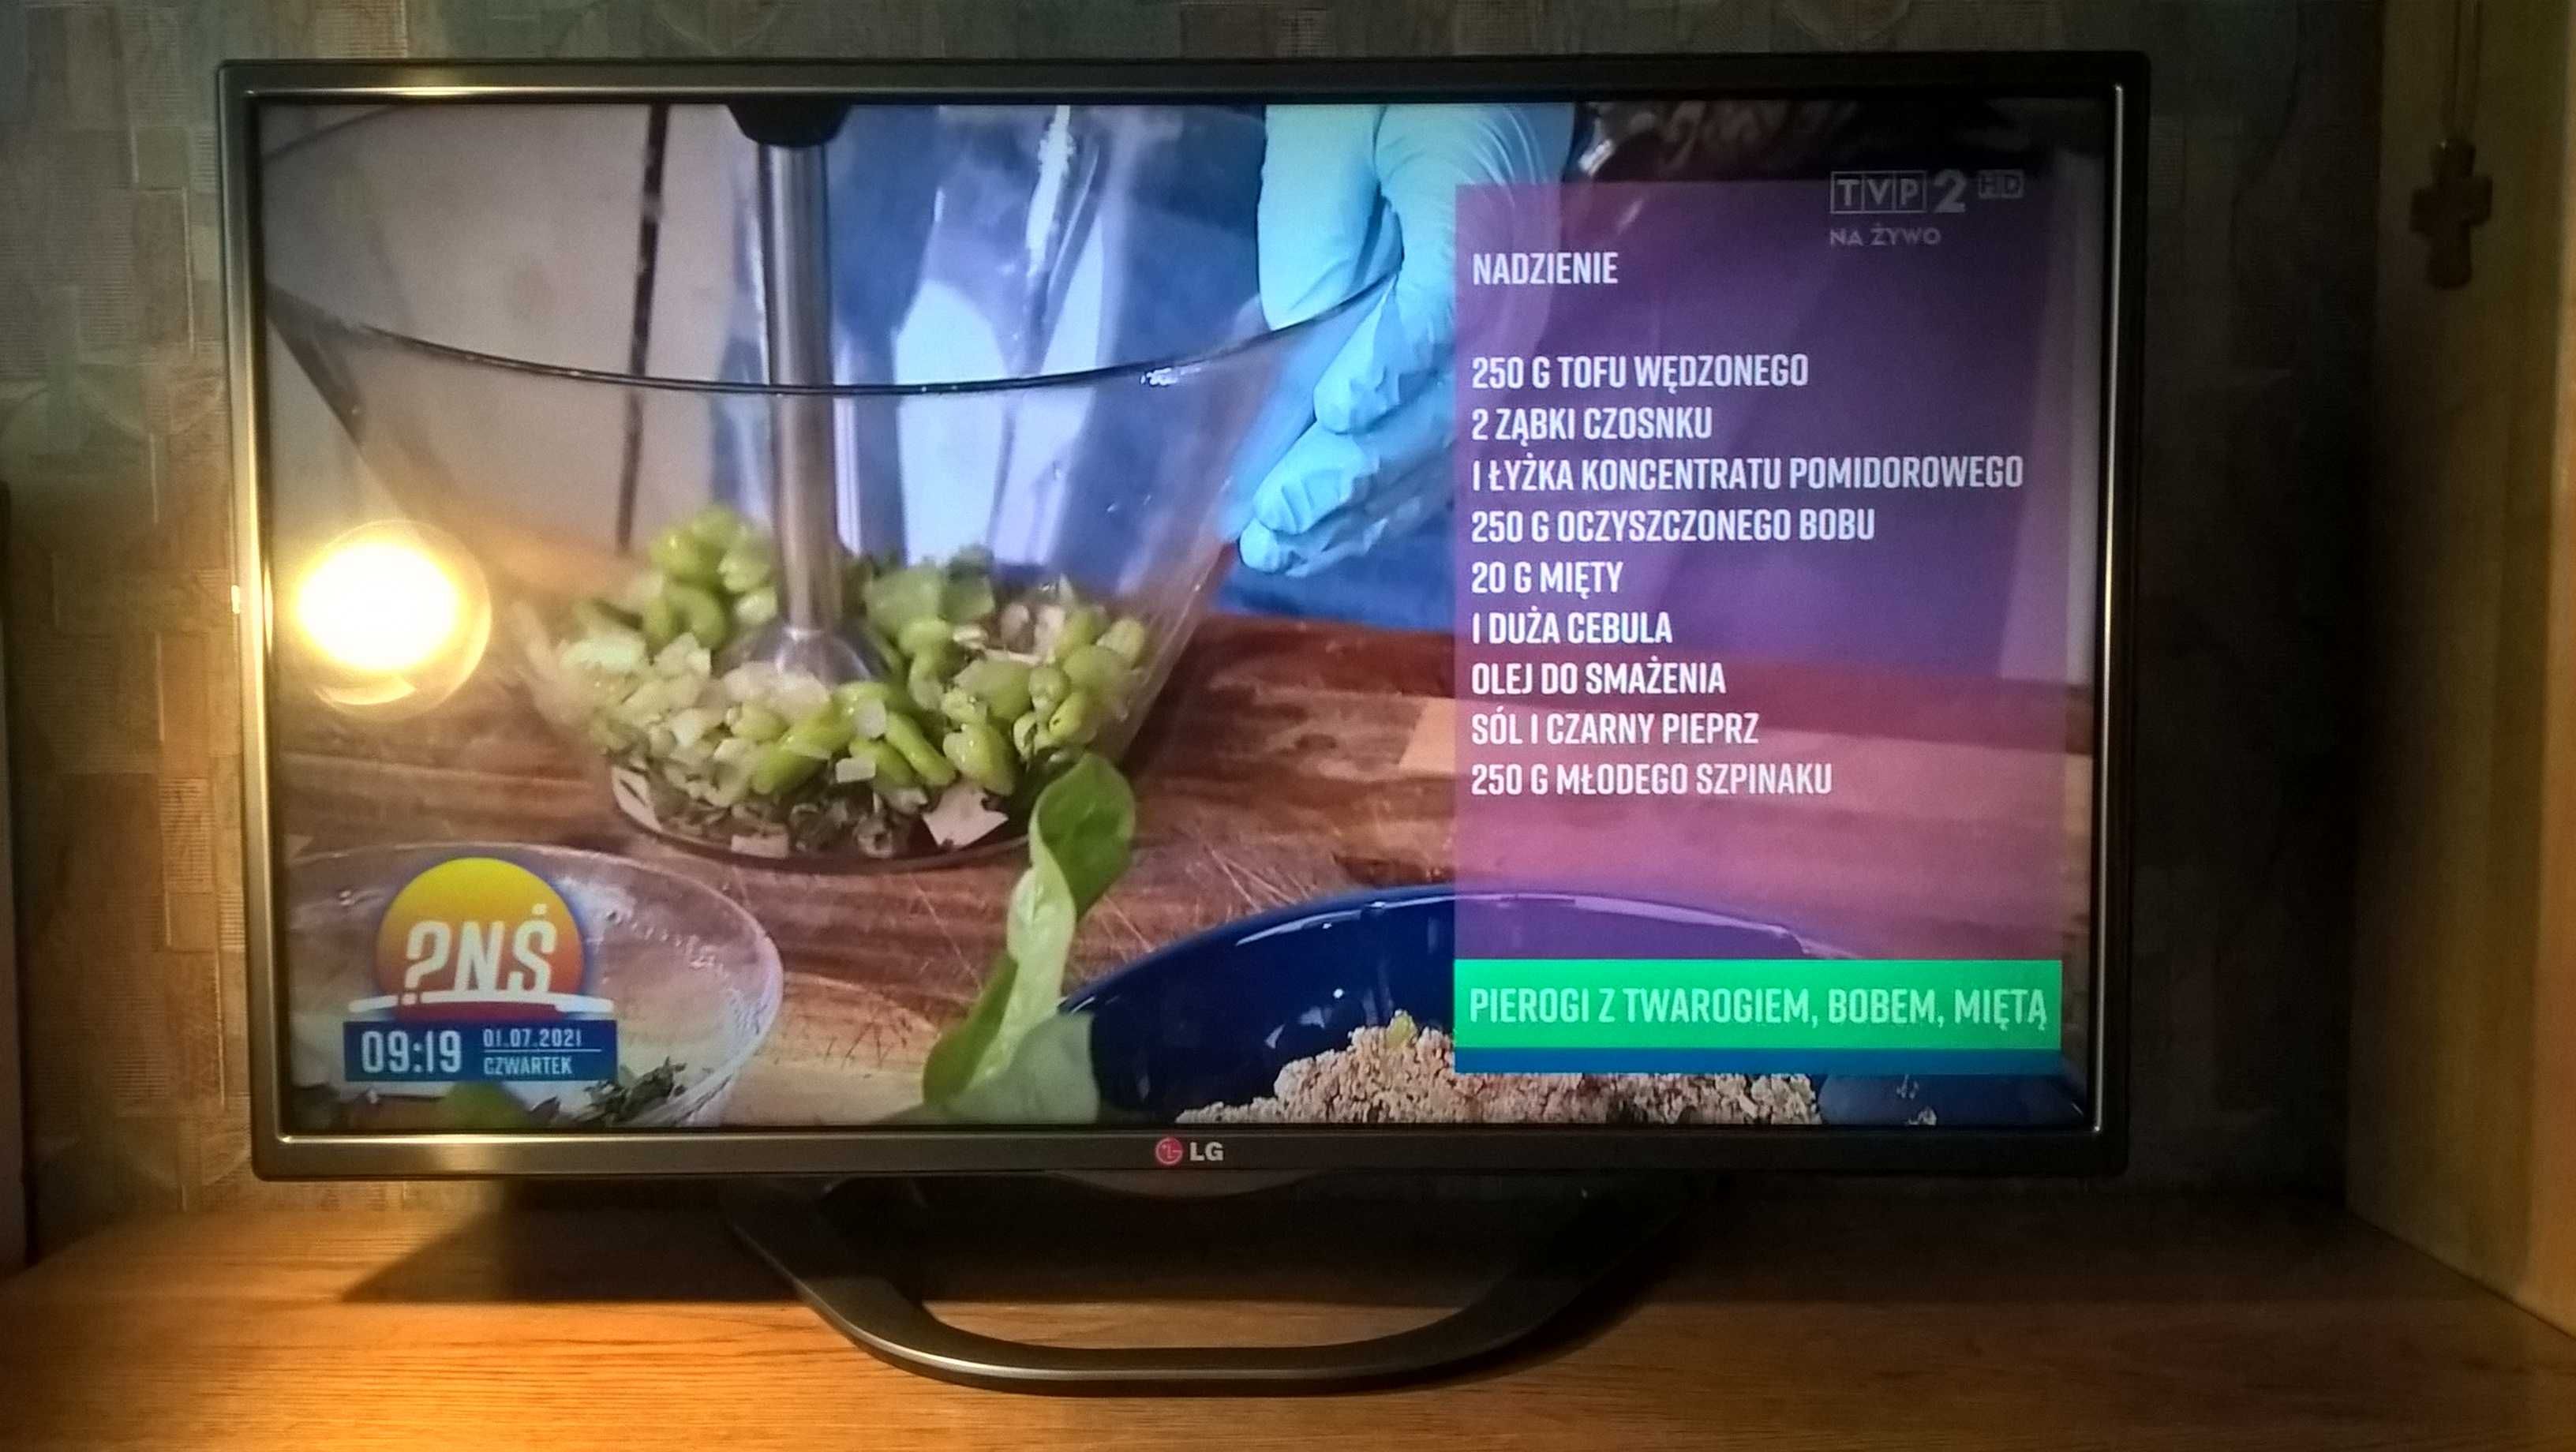 Telewizor / Monitor 32cale LG LA620S FULL HD DVB-T Smart TV Hbb 3D